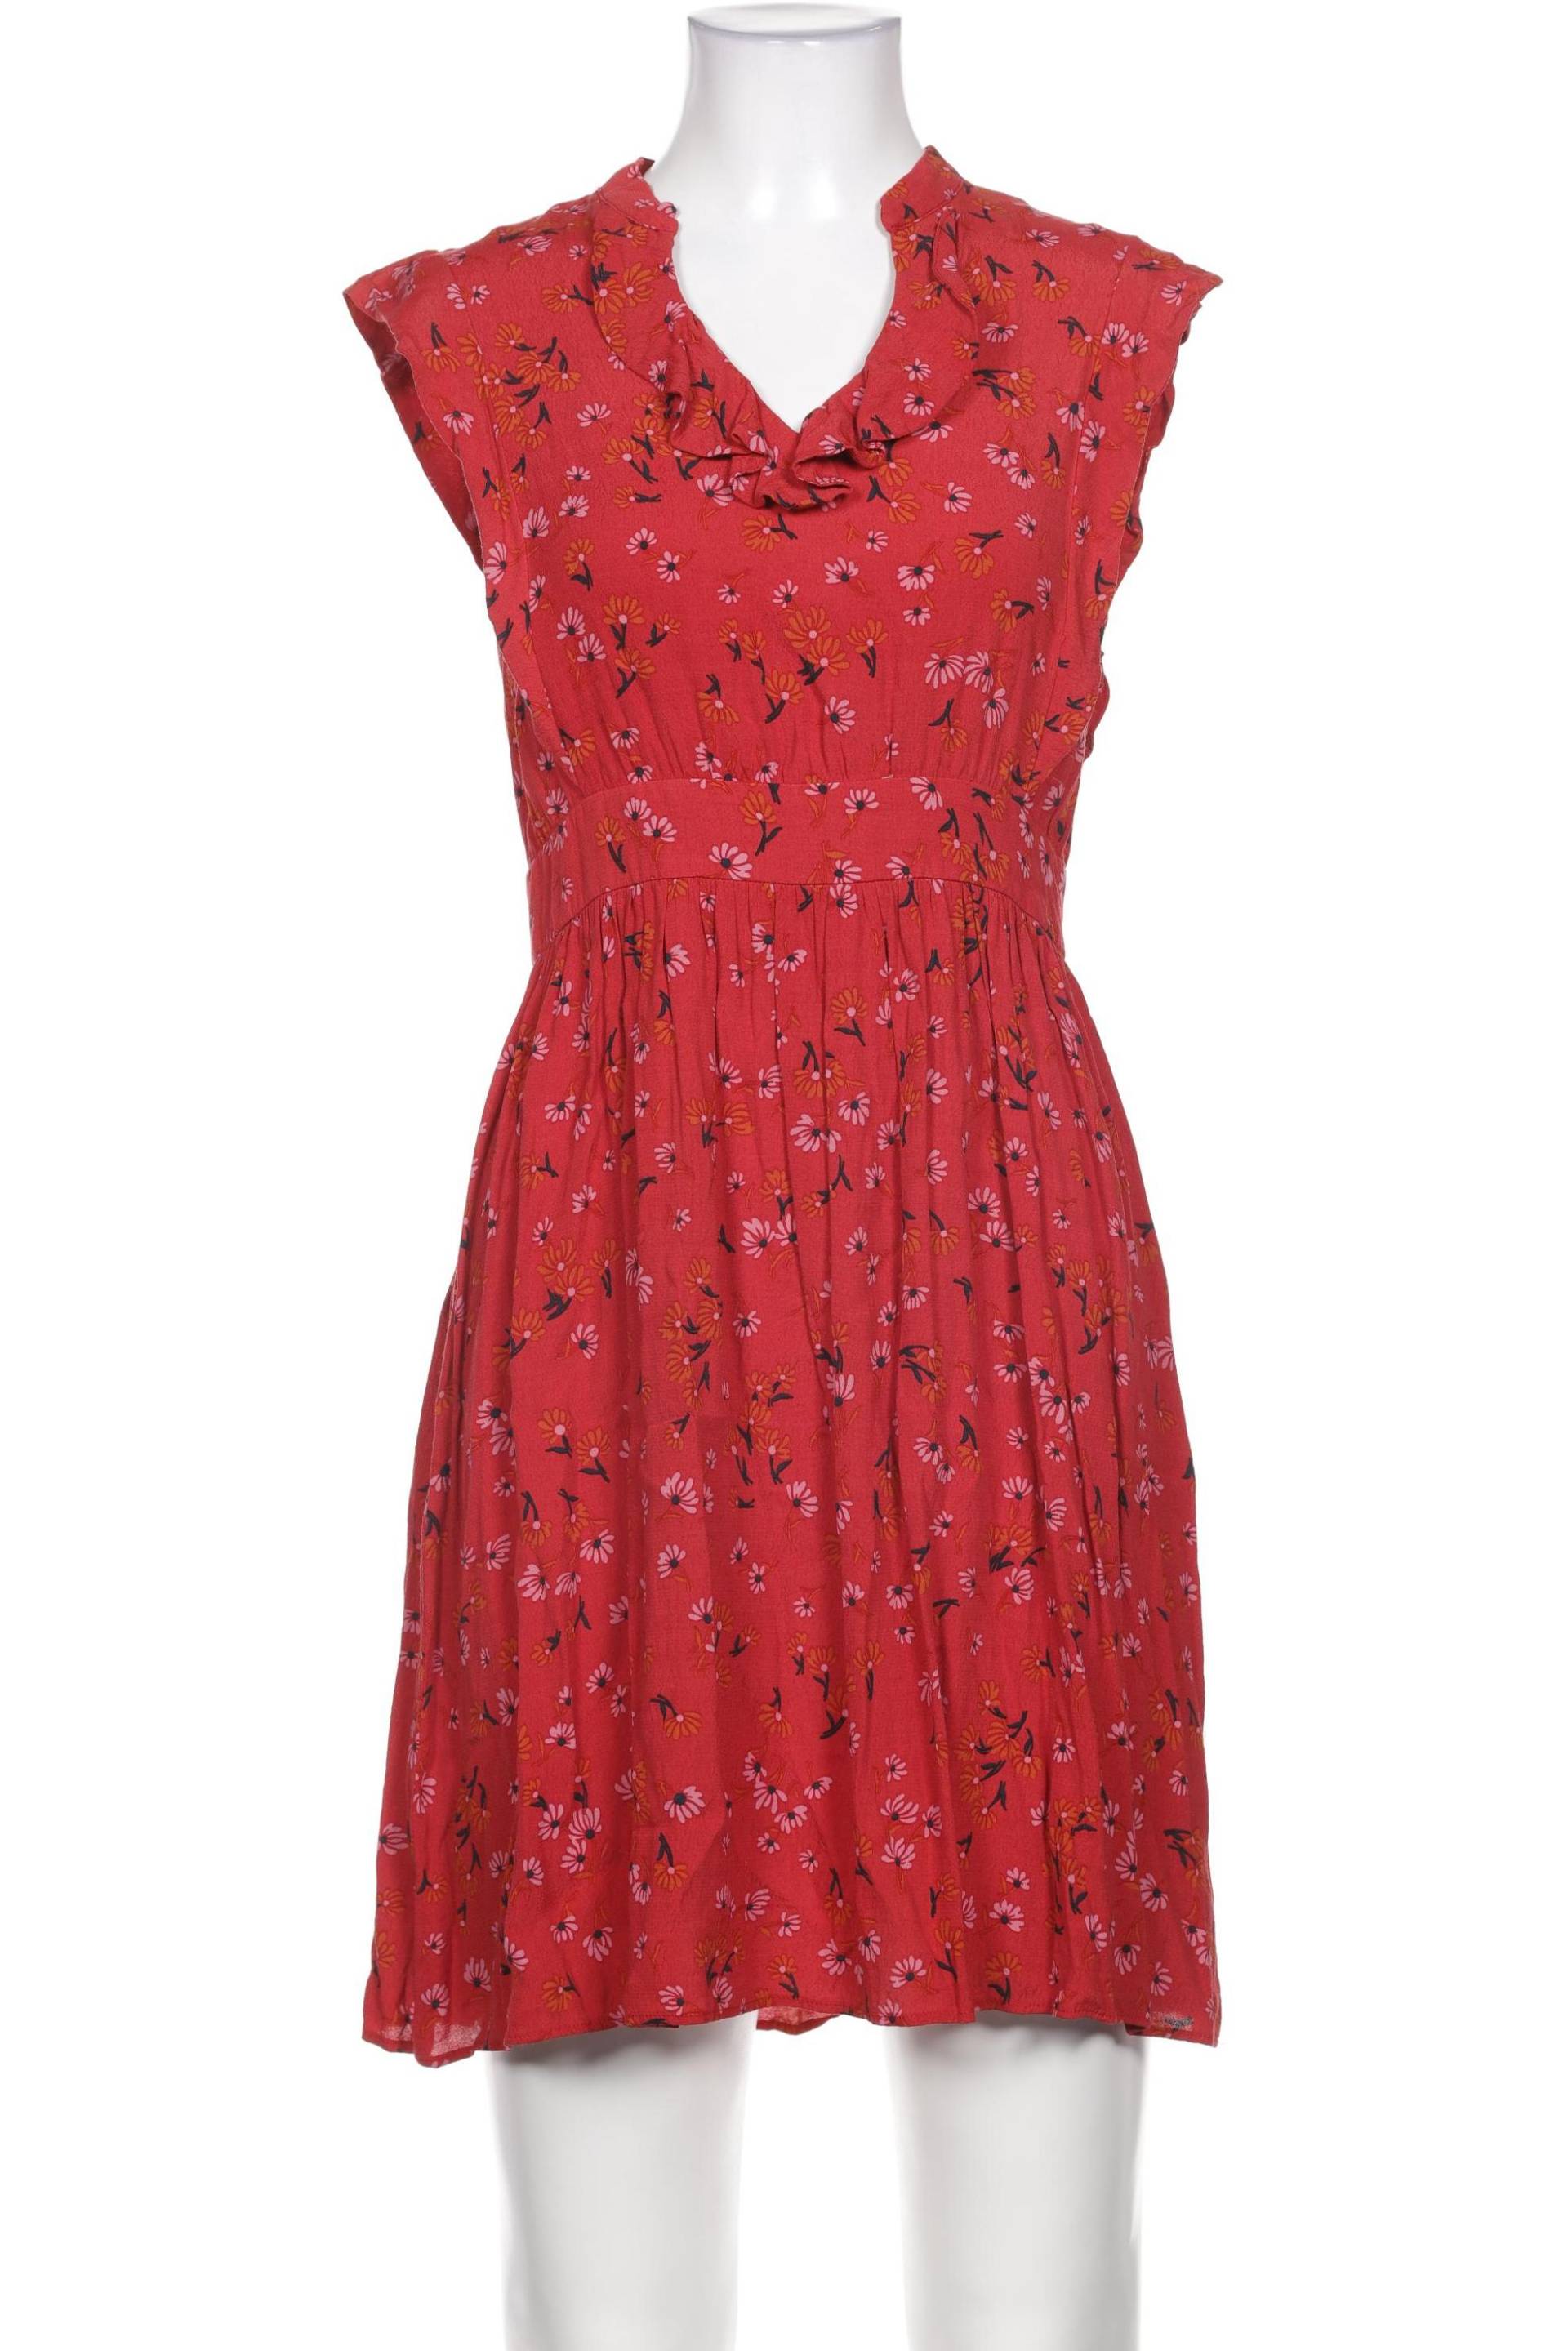 Tara Jarmon Damen Kleid, rot, Gr. 38 von Tara Jarmon